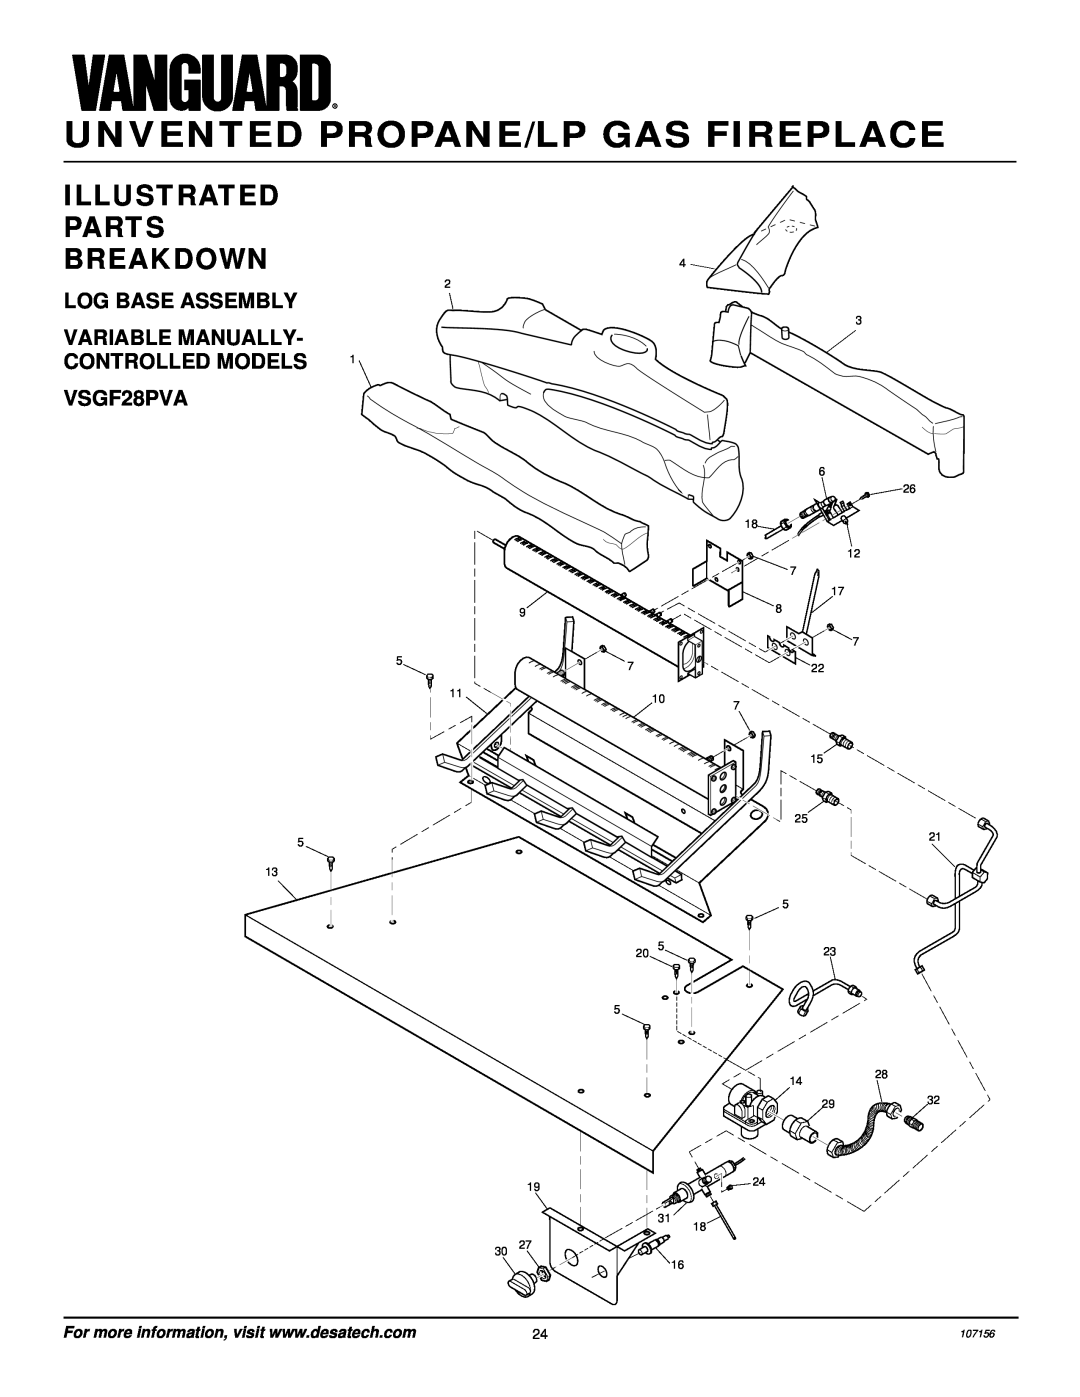 Vanguard Heating VSGF28PTC Illustrated, Parts, Breakdown, Log Base Assembly, Variable Manually, Controlled Models 